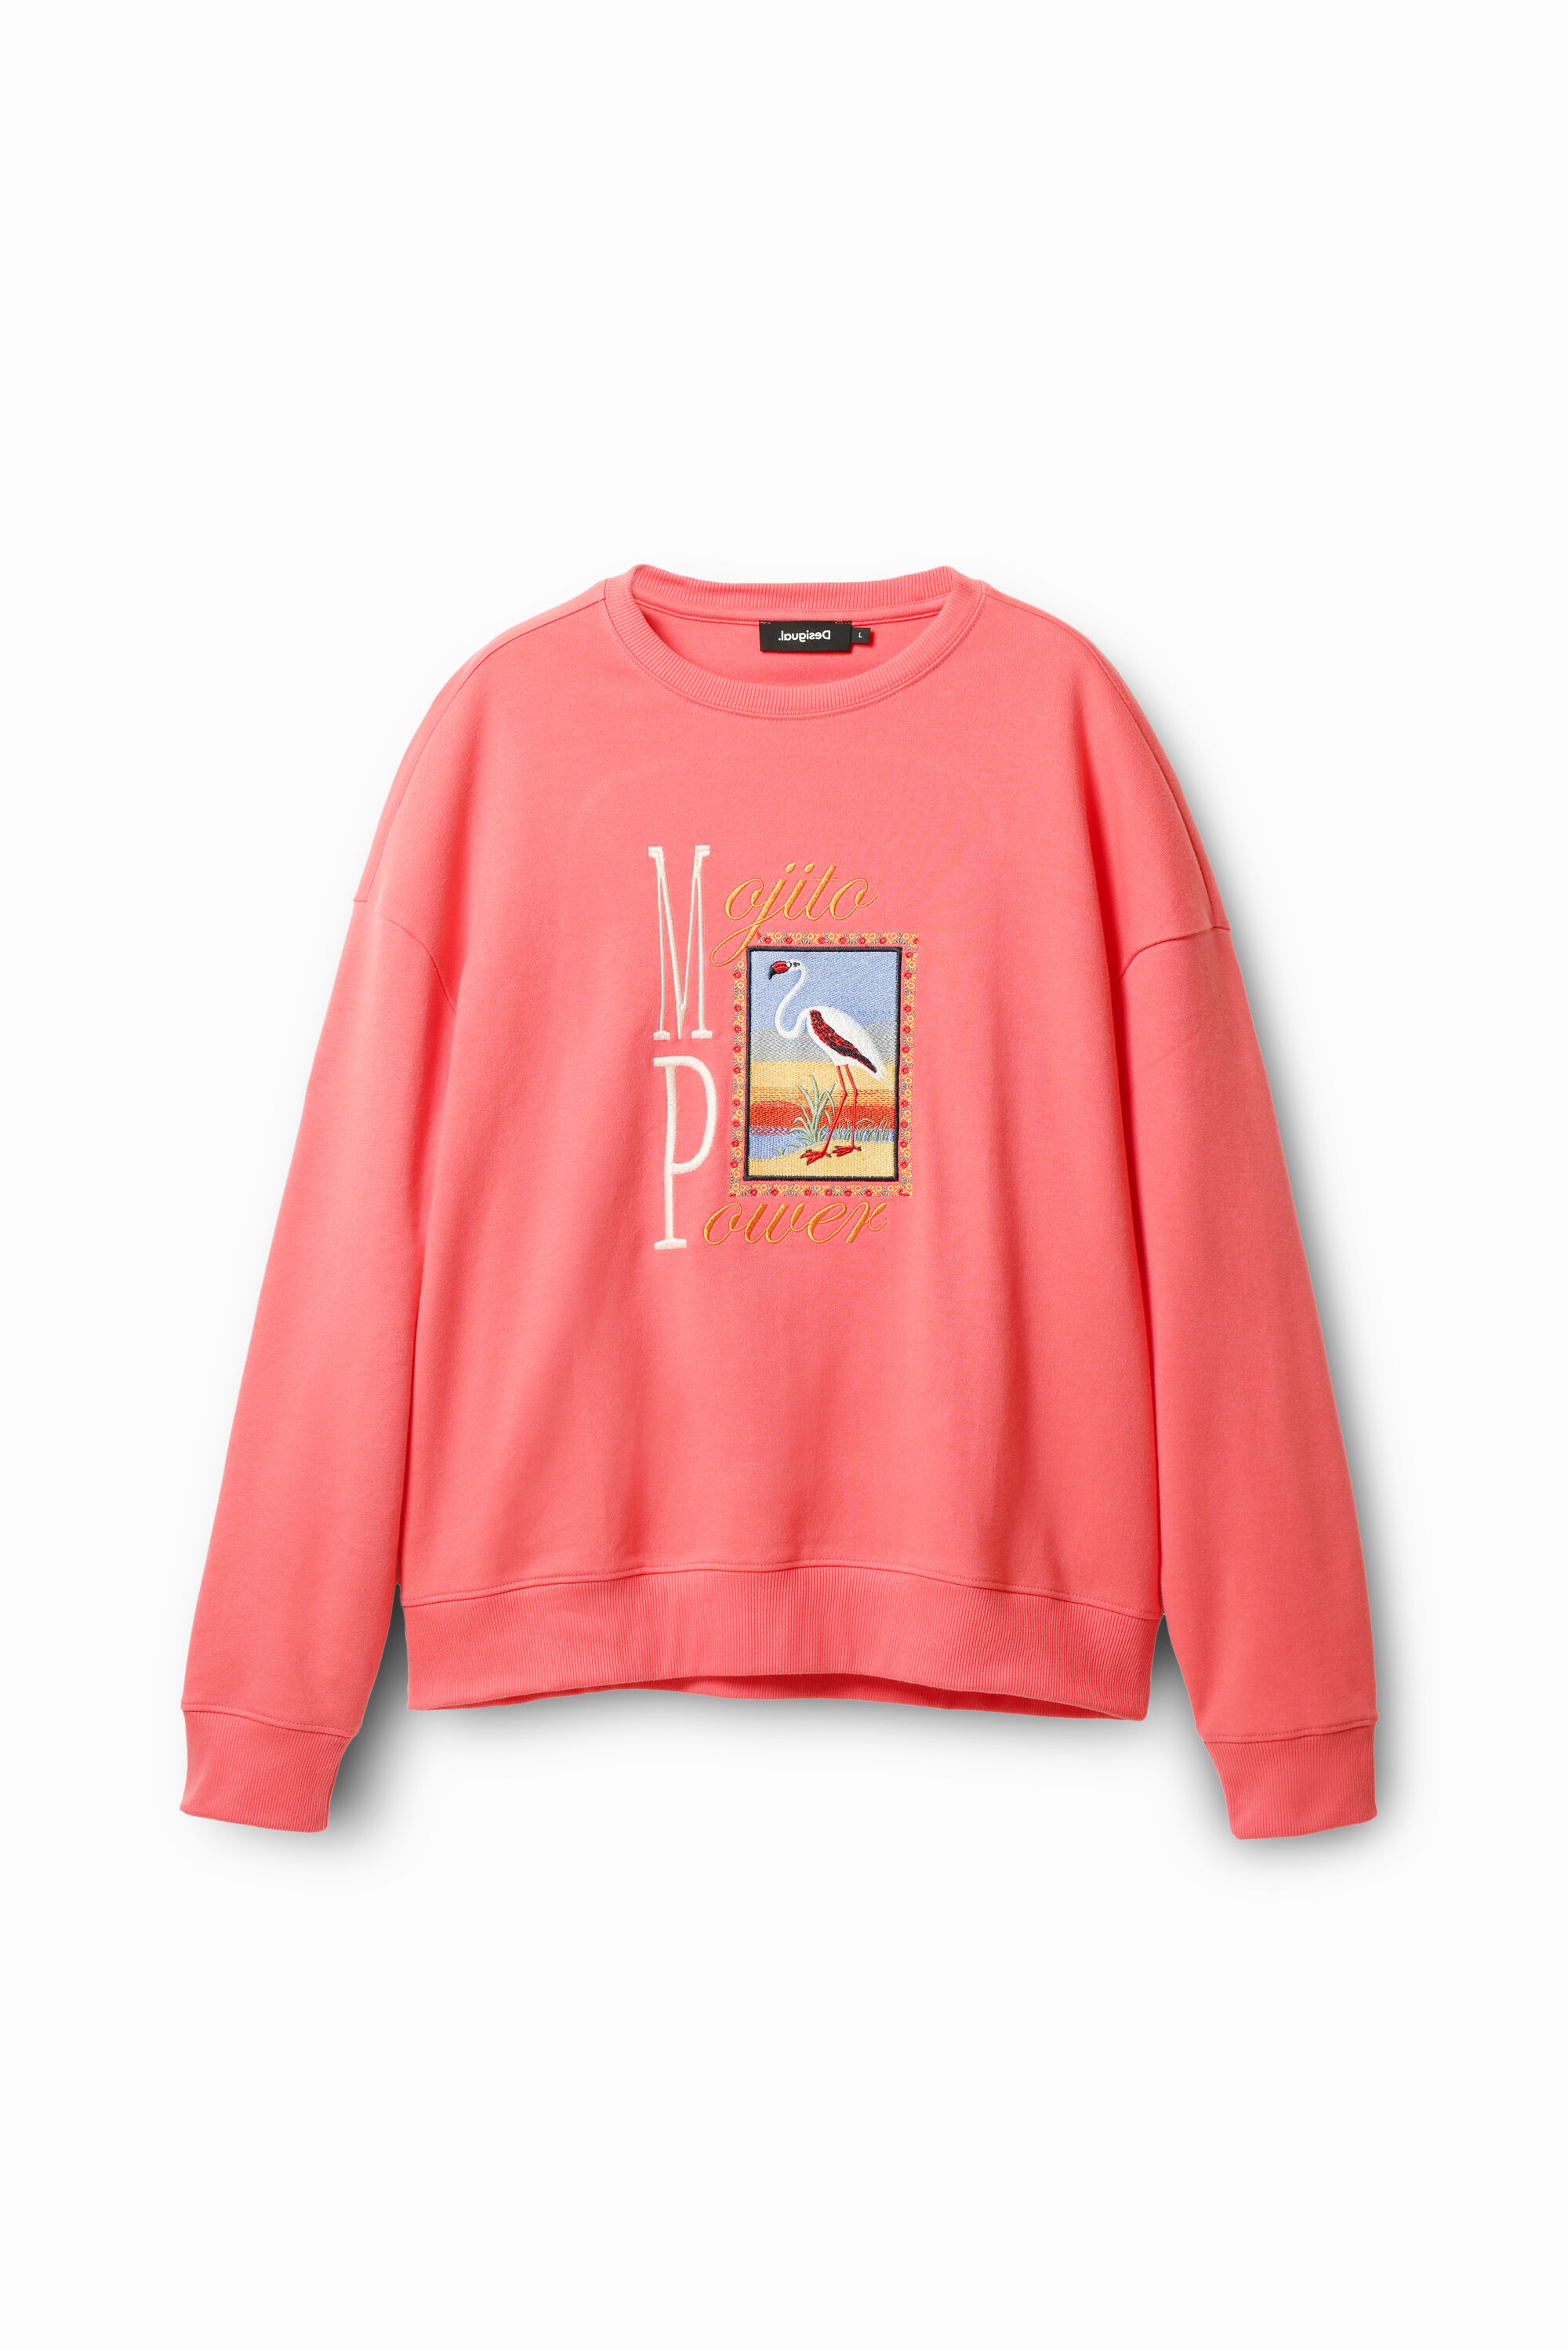 Desigual Flamingo embroidery sweatshirt